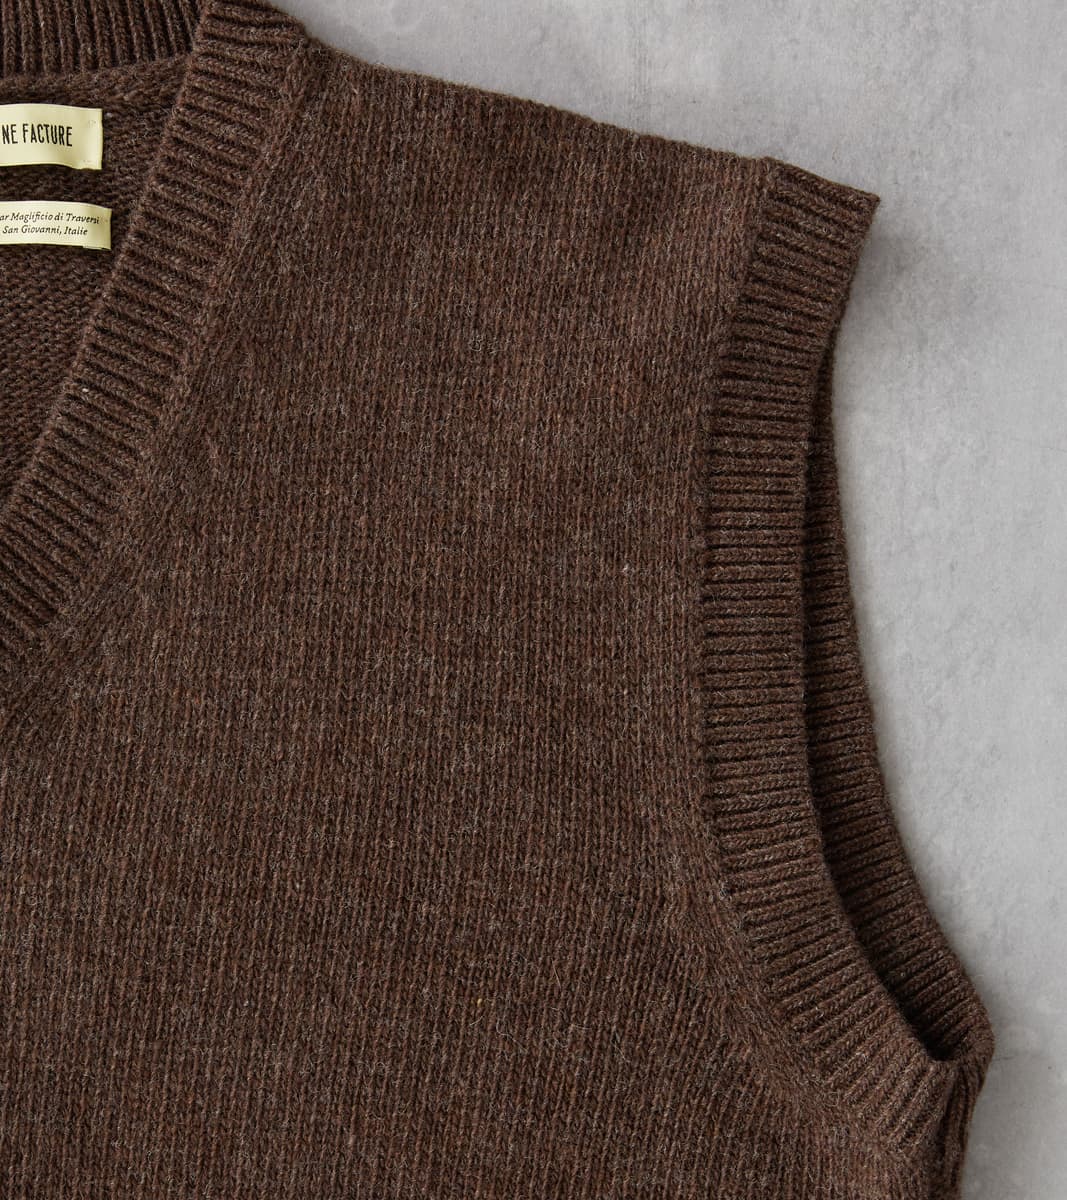 De Bonne Facture French Merino Wool Knit Vest - Undyed Brown